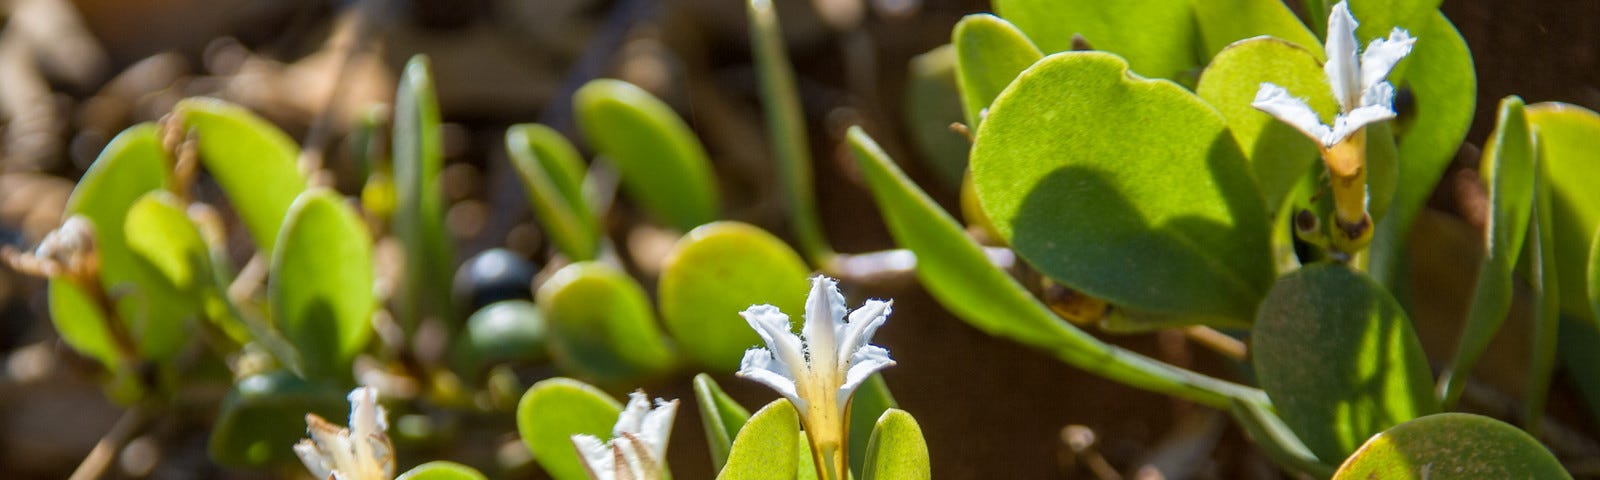 Close-up of naupaka papa (Scaevola coriacea, dwarf naupaka) plant. Dainty white half-flowers, small round dark purple fruit, and rounded green succulent leaves.